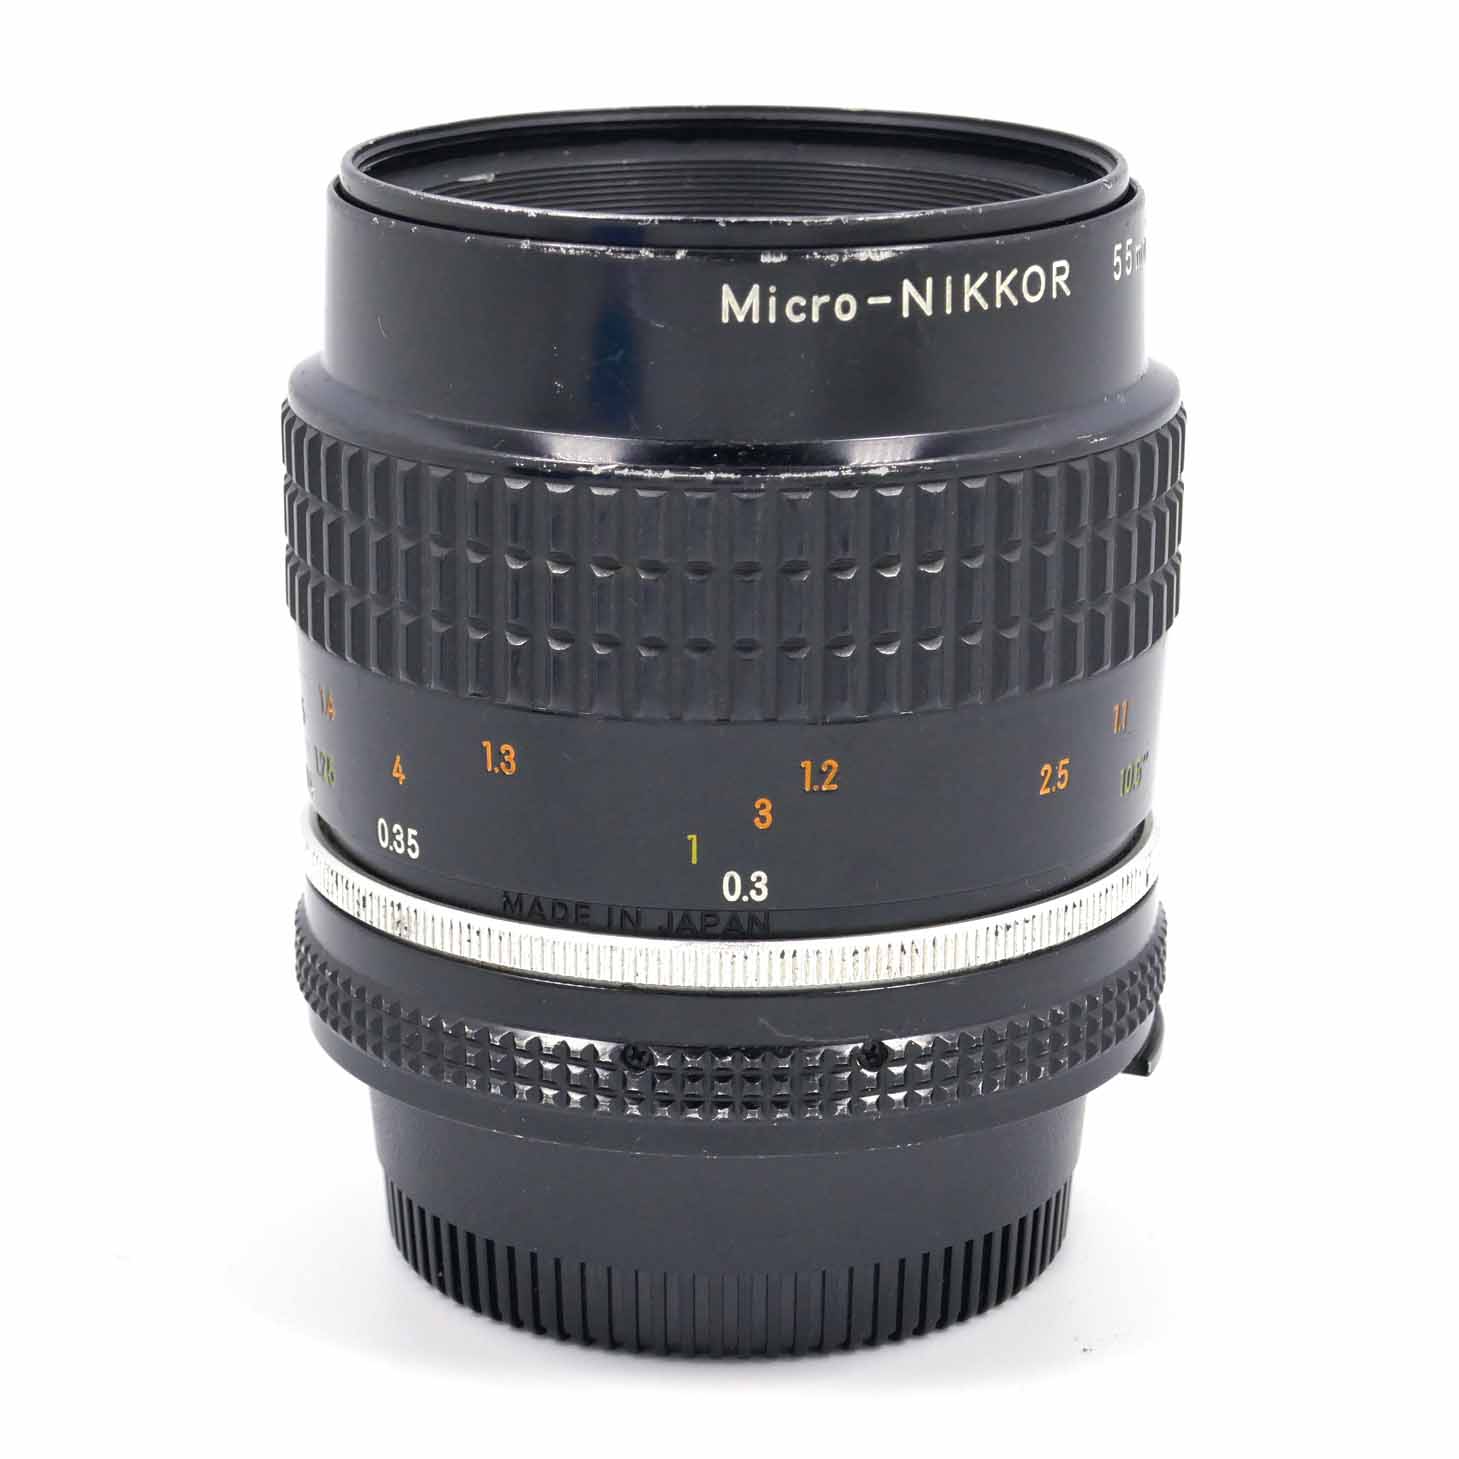 Nikon Micro-Nikkor 55mm / 2.8 AIS - Clean Cameras | Markus Säuberli